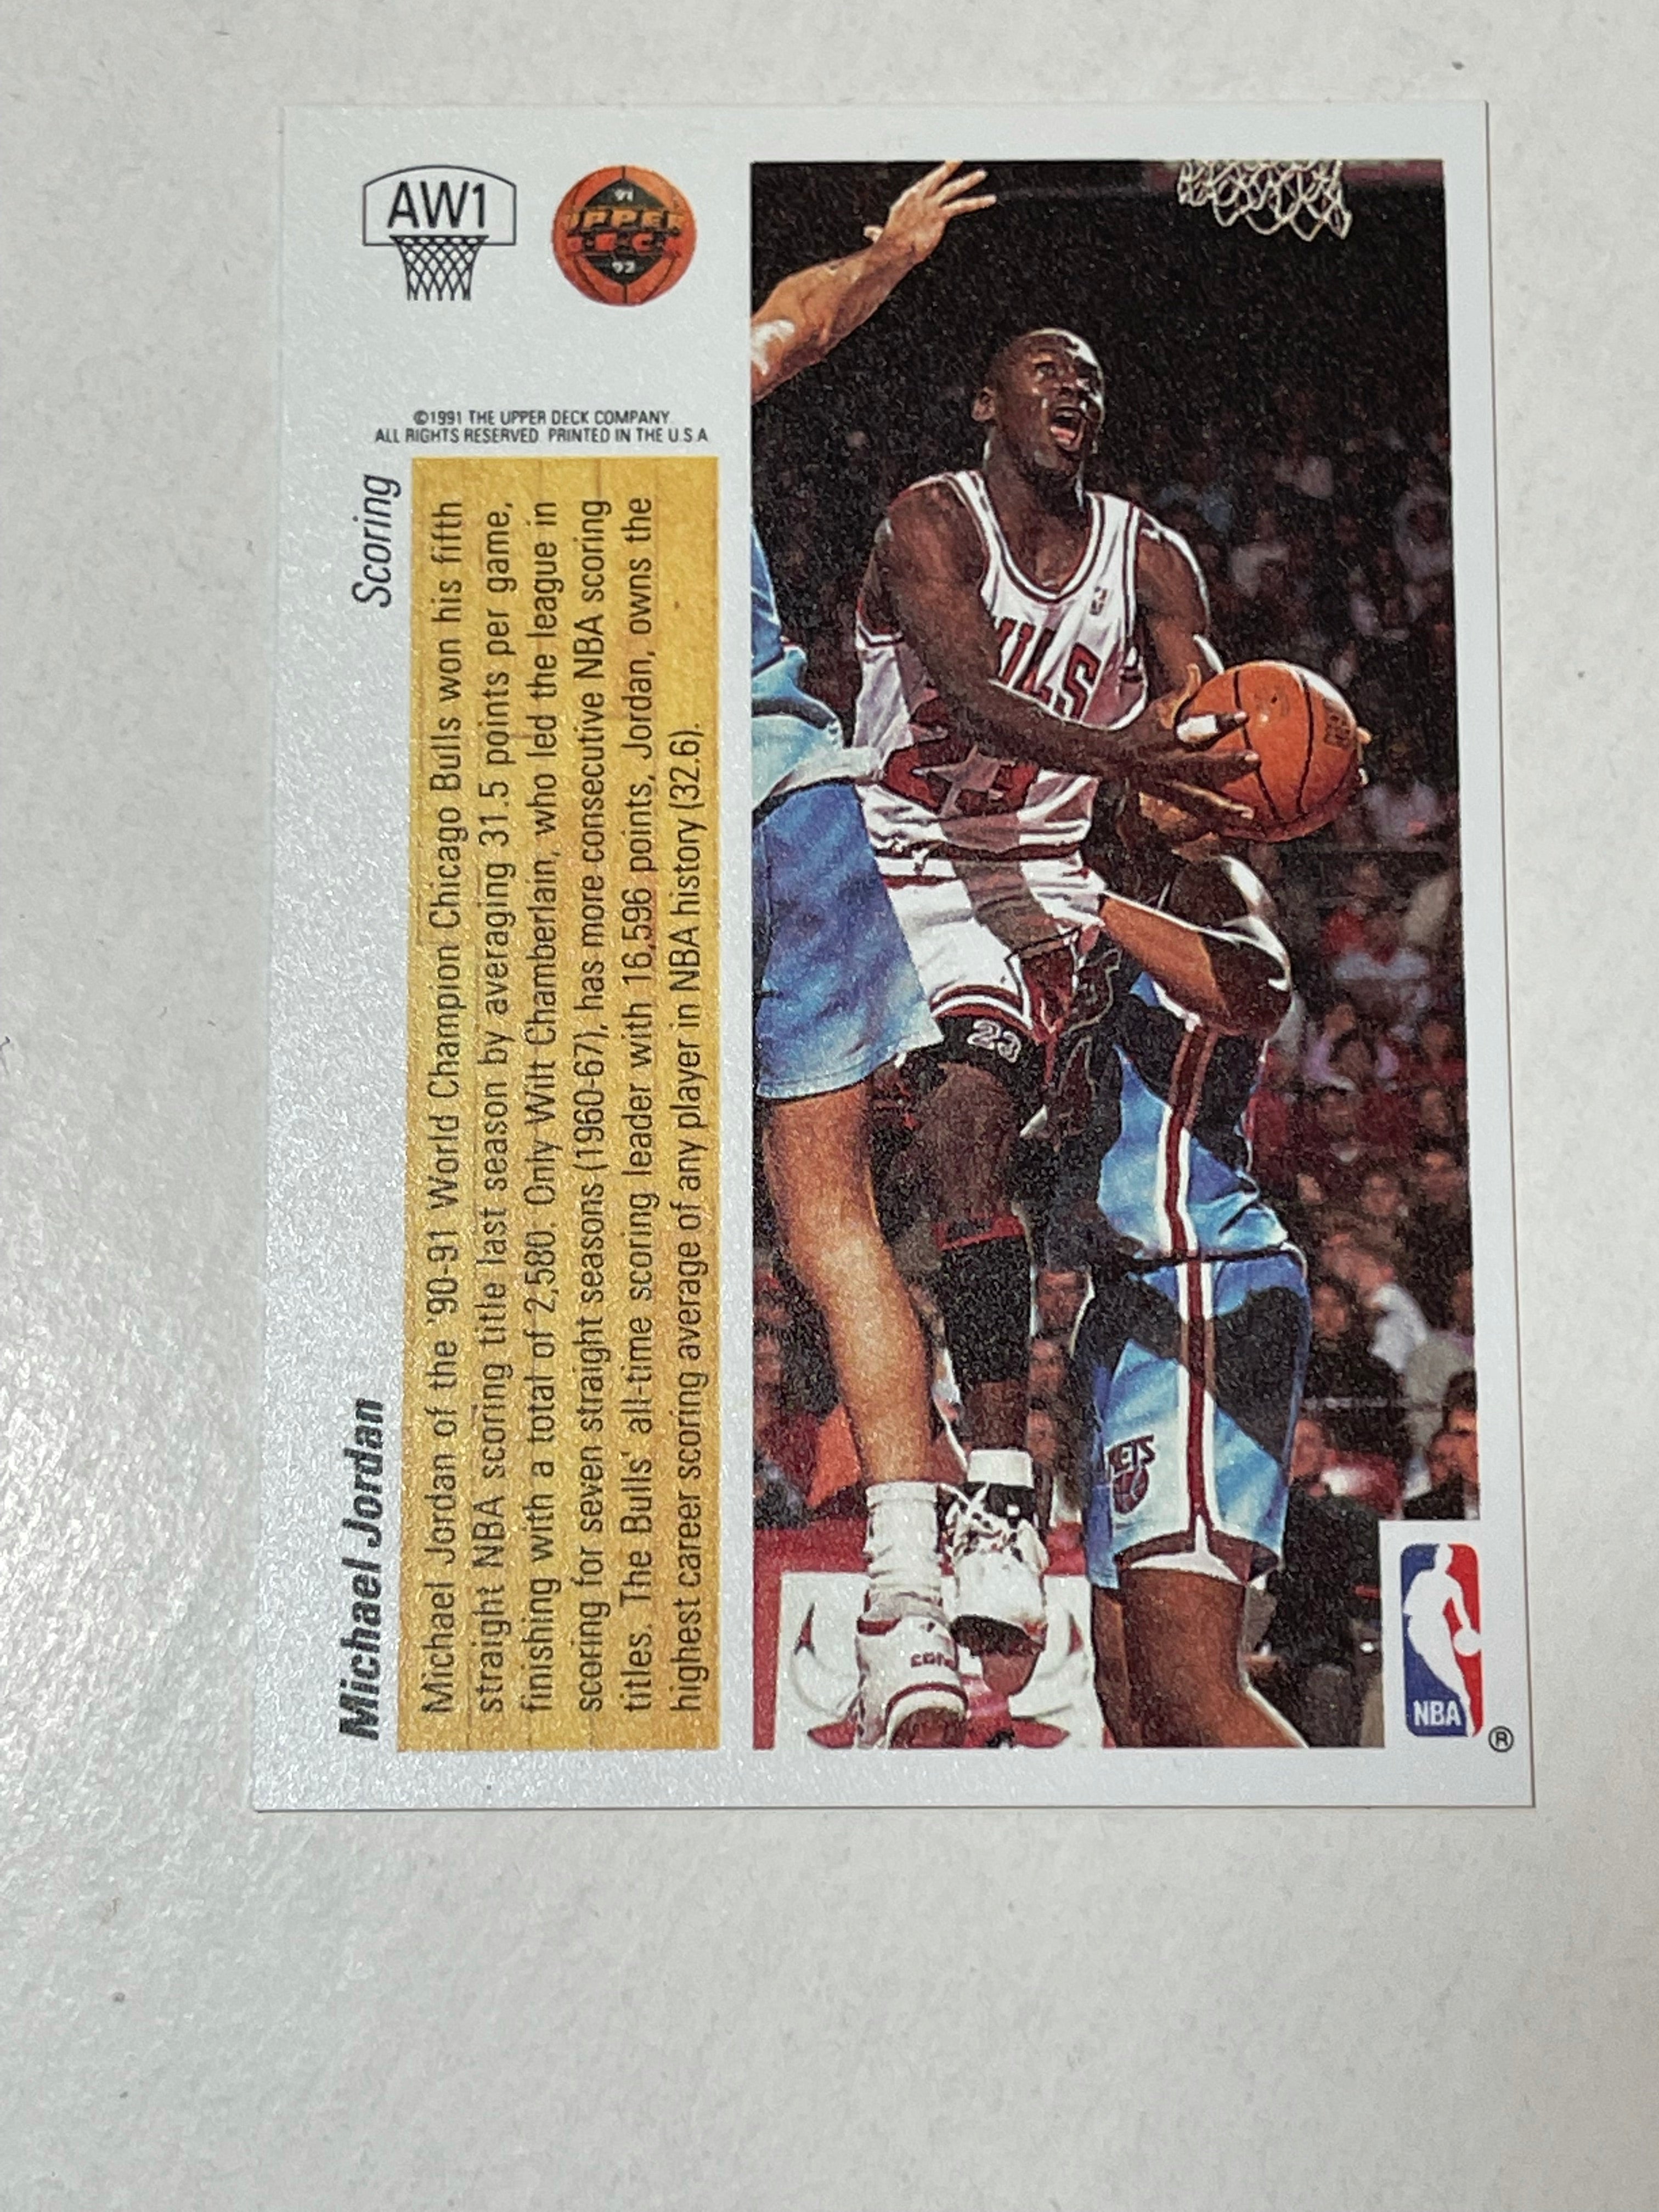 Michael Jordan Upper Deck hologram basketball insert card 1991